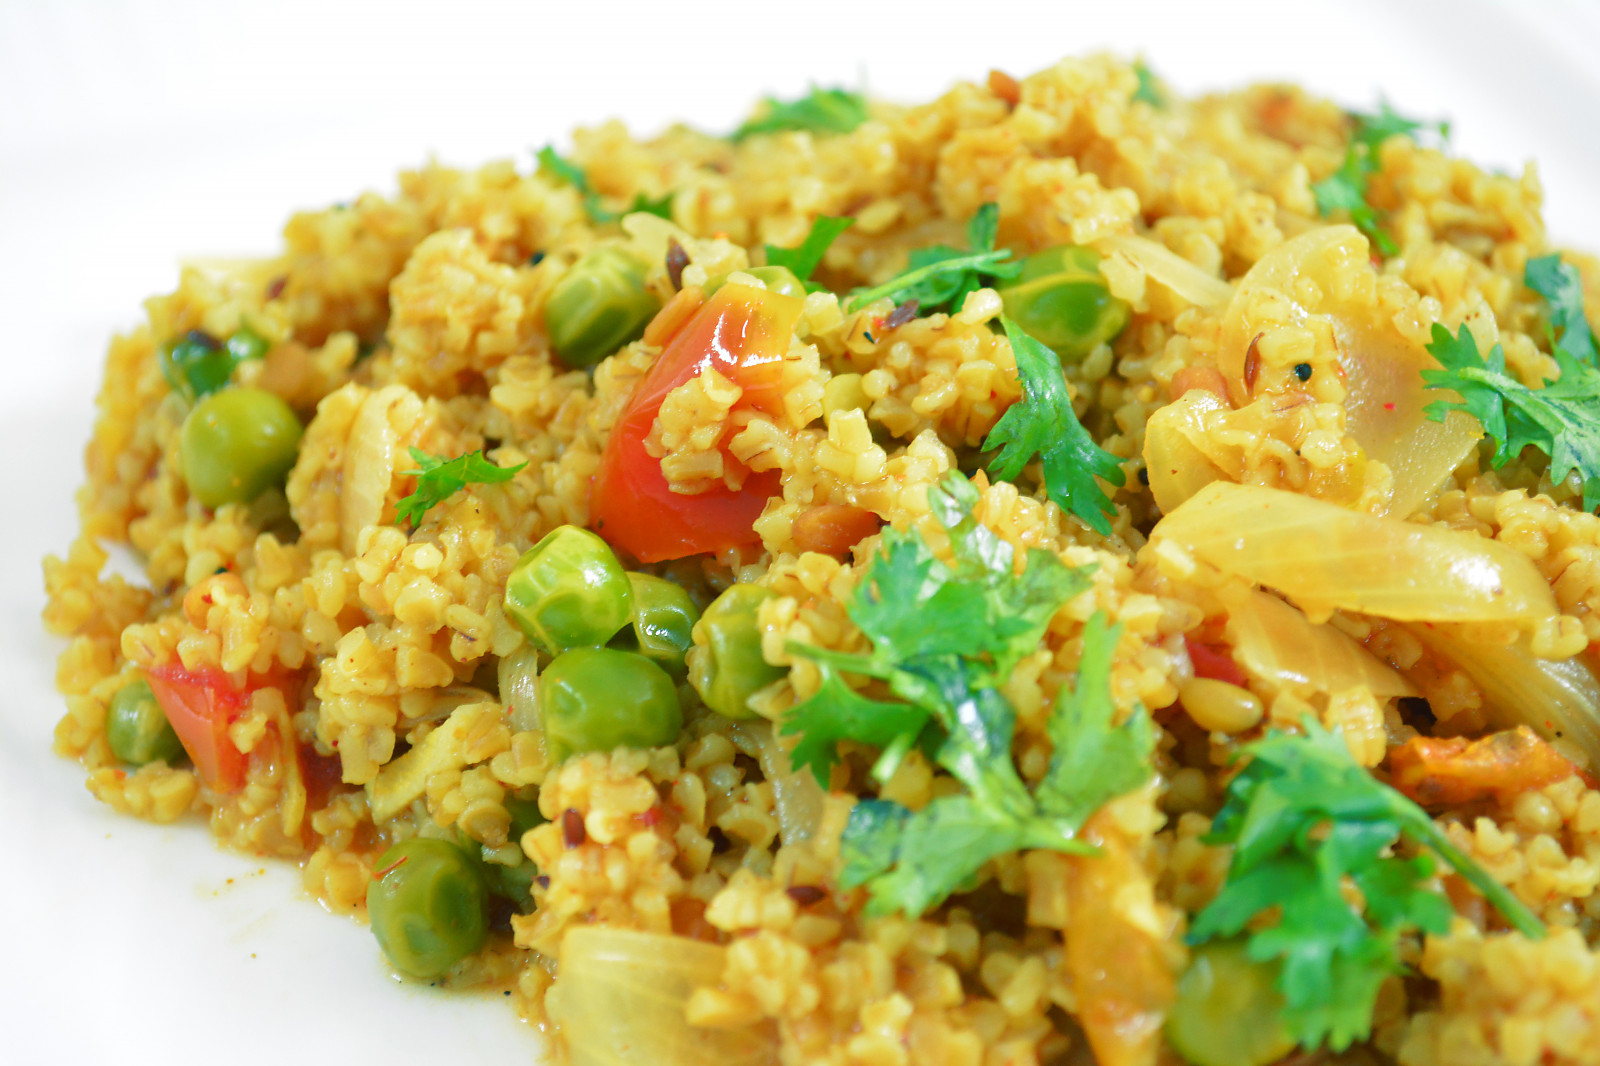 Spicy Broken Wheat Khichdi With Vegetables Recipe